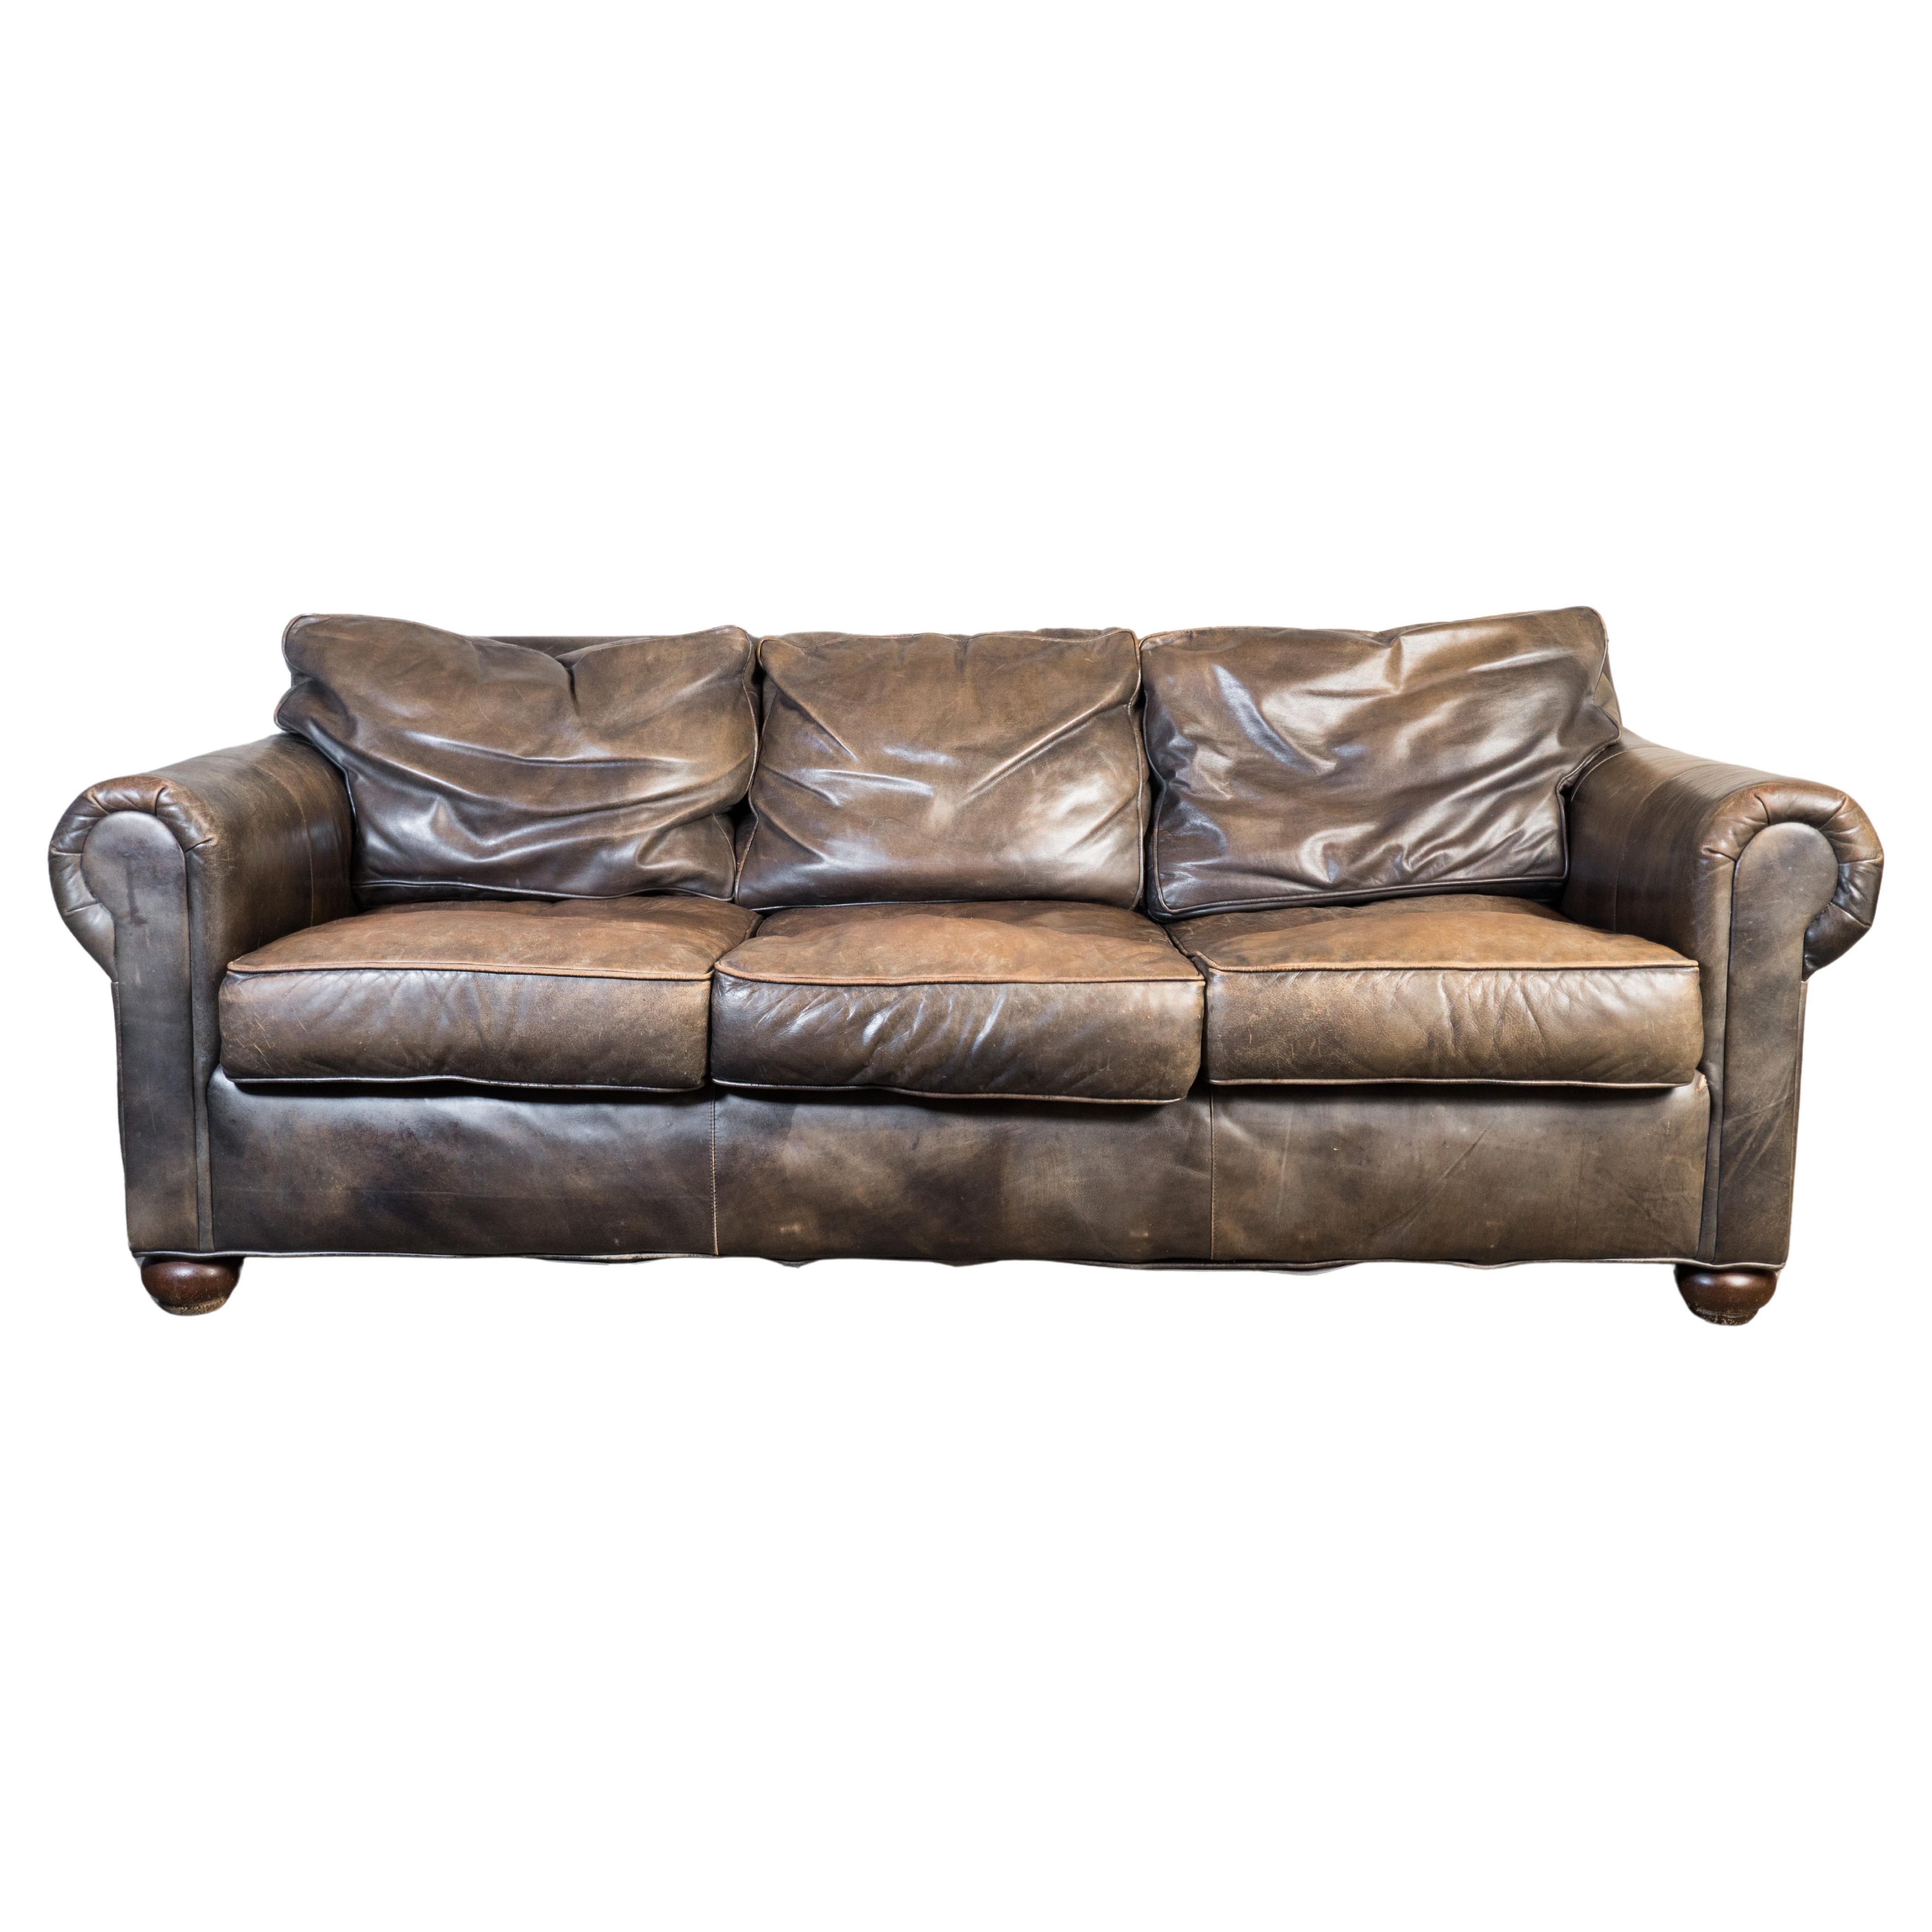 Restoration Hardware 'Lancaster' Distressed Leather Sofa